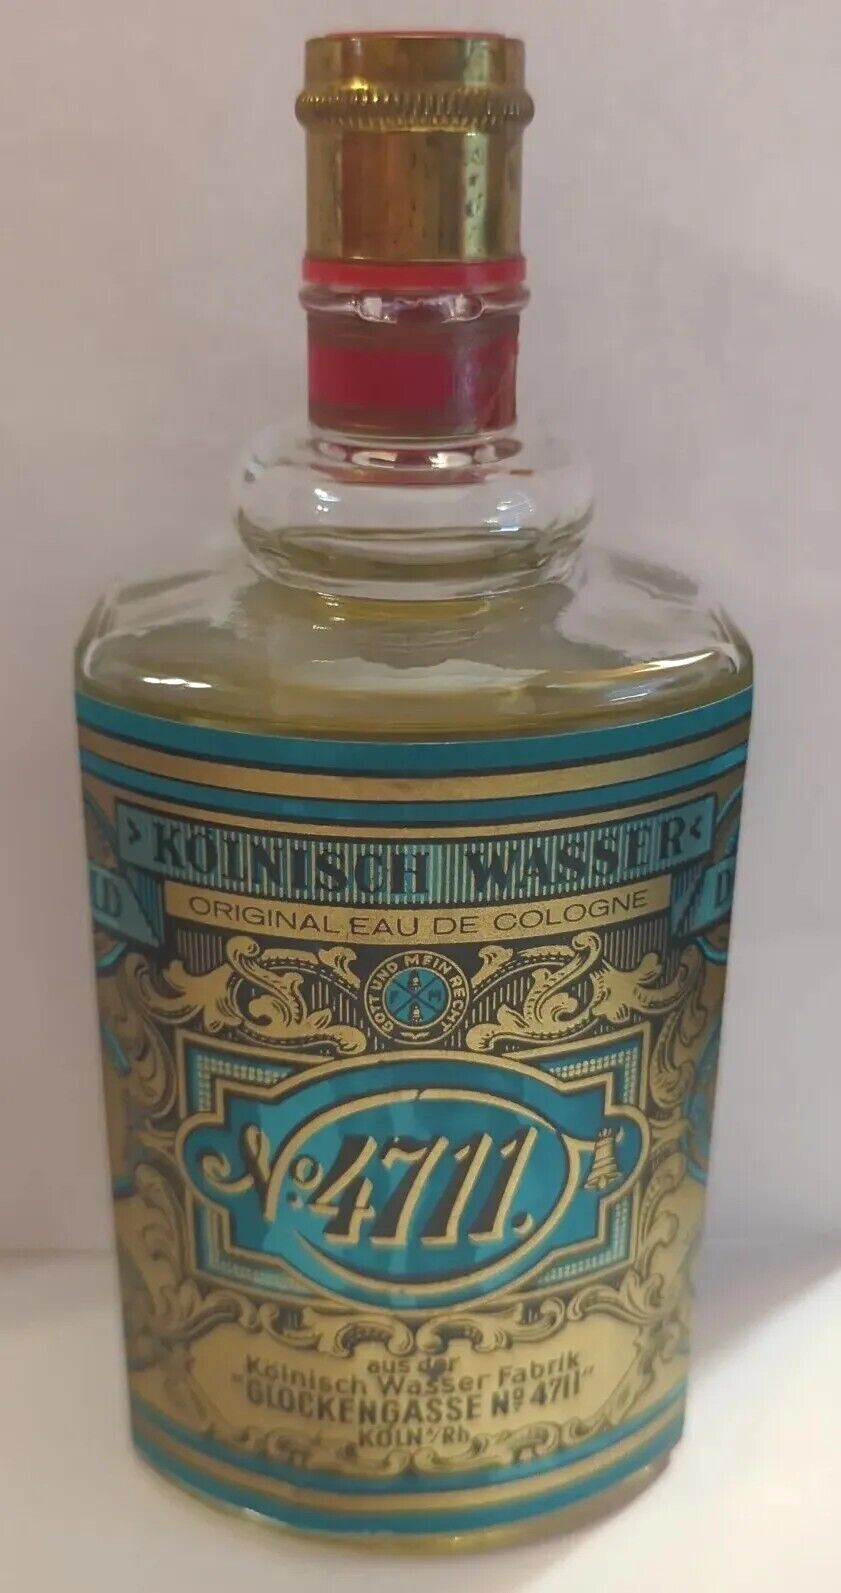 Vintage ECHT KOLNISCH WASSER No 4711 ORIGINAL EAU DE COLOGNE HUGE 10 oz / 300 ml